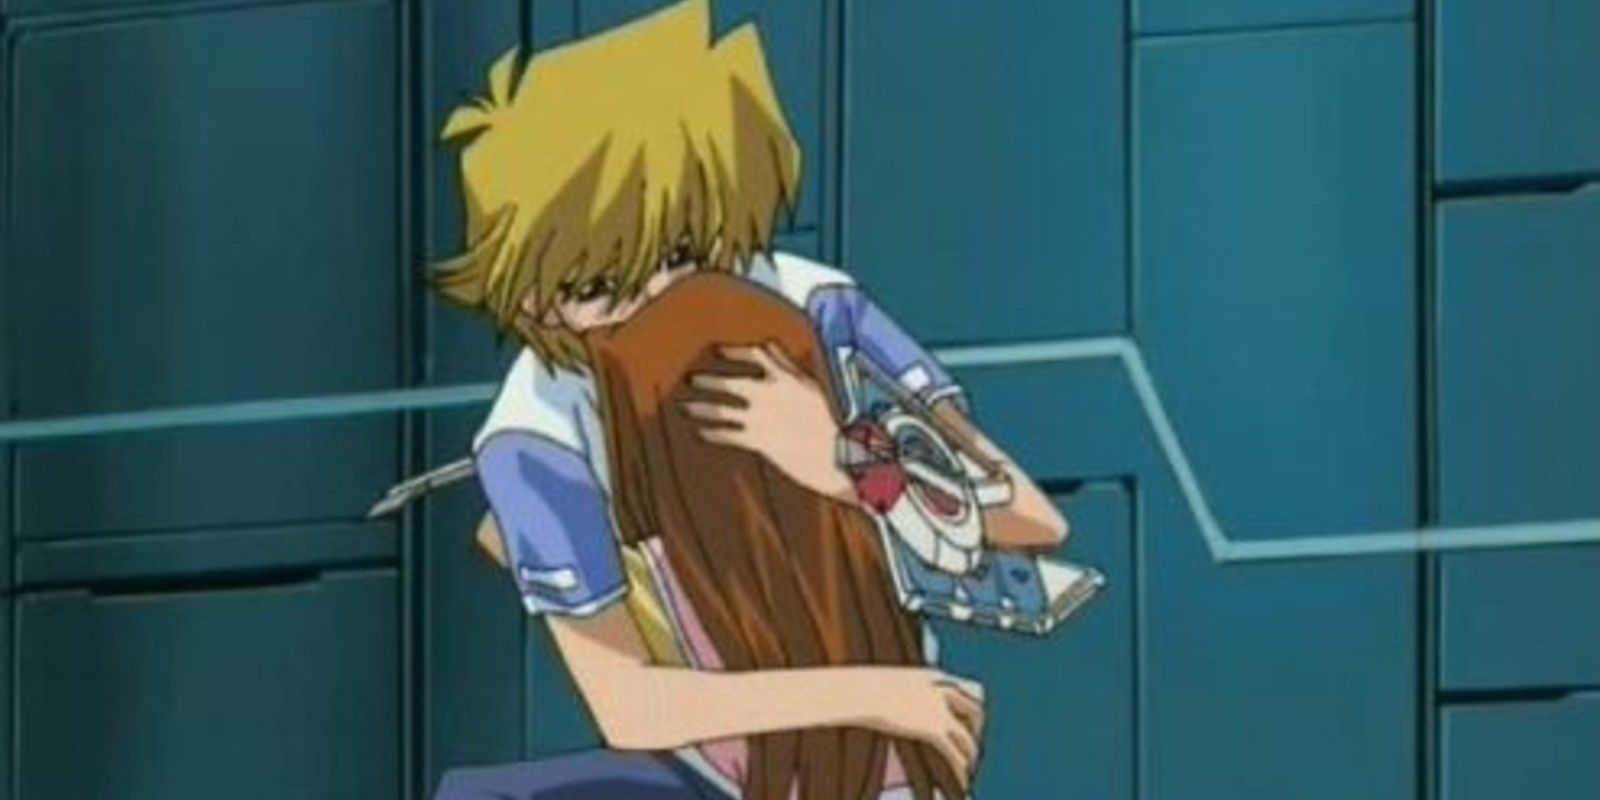 Joey and Serenity hugging